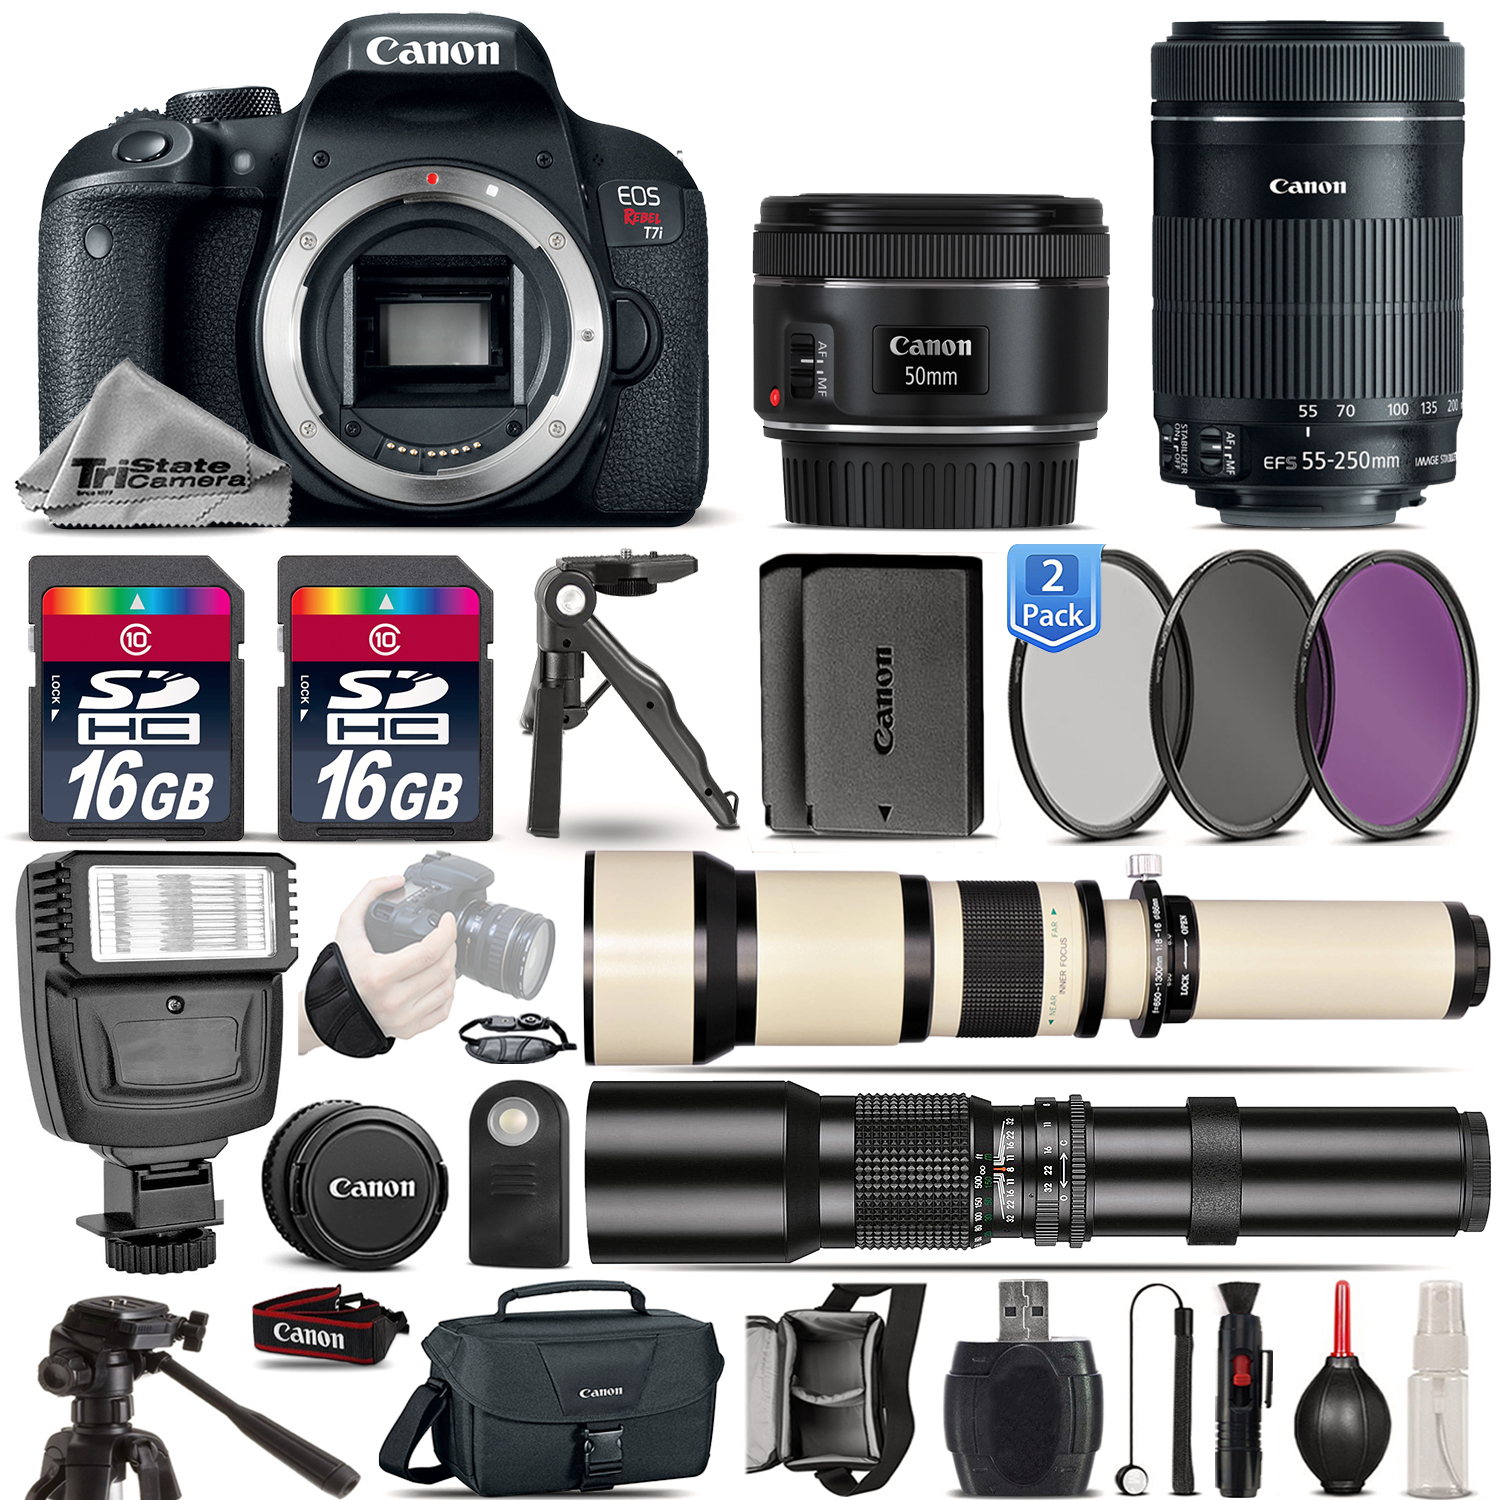 EOS Rebel T7i Camera 800D + 50mm 1.8 + 55-250mm STM + EXT BATT - 32GB Kit *FREE SHIPPING*